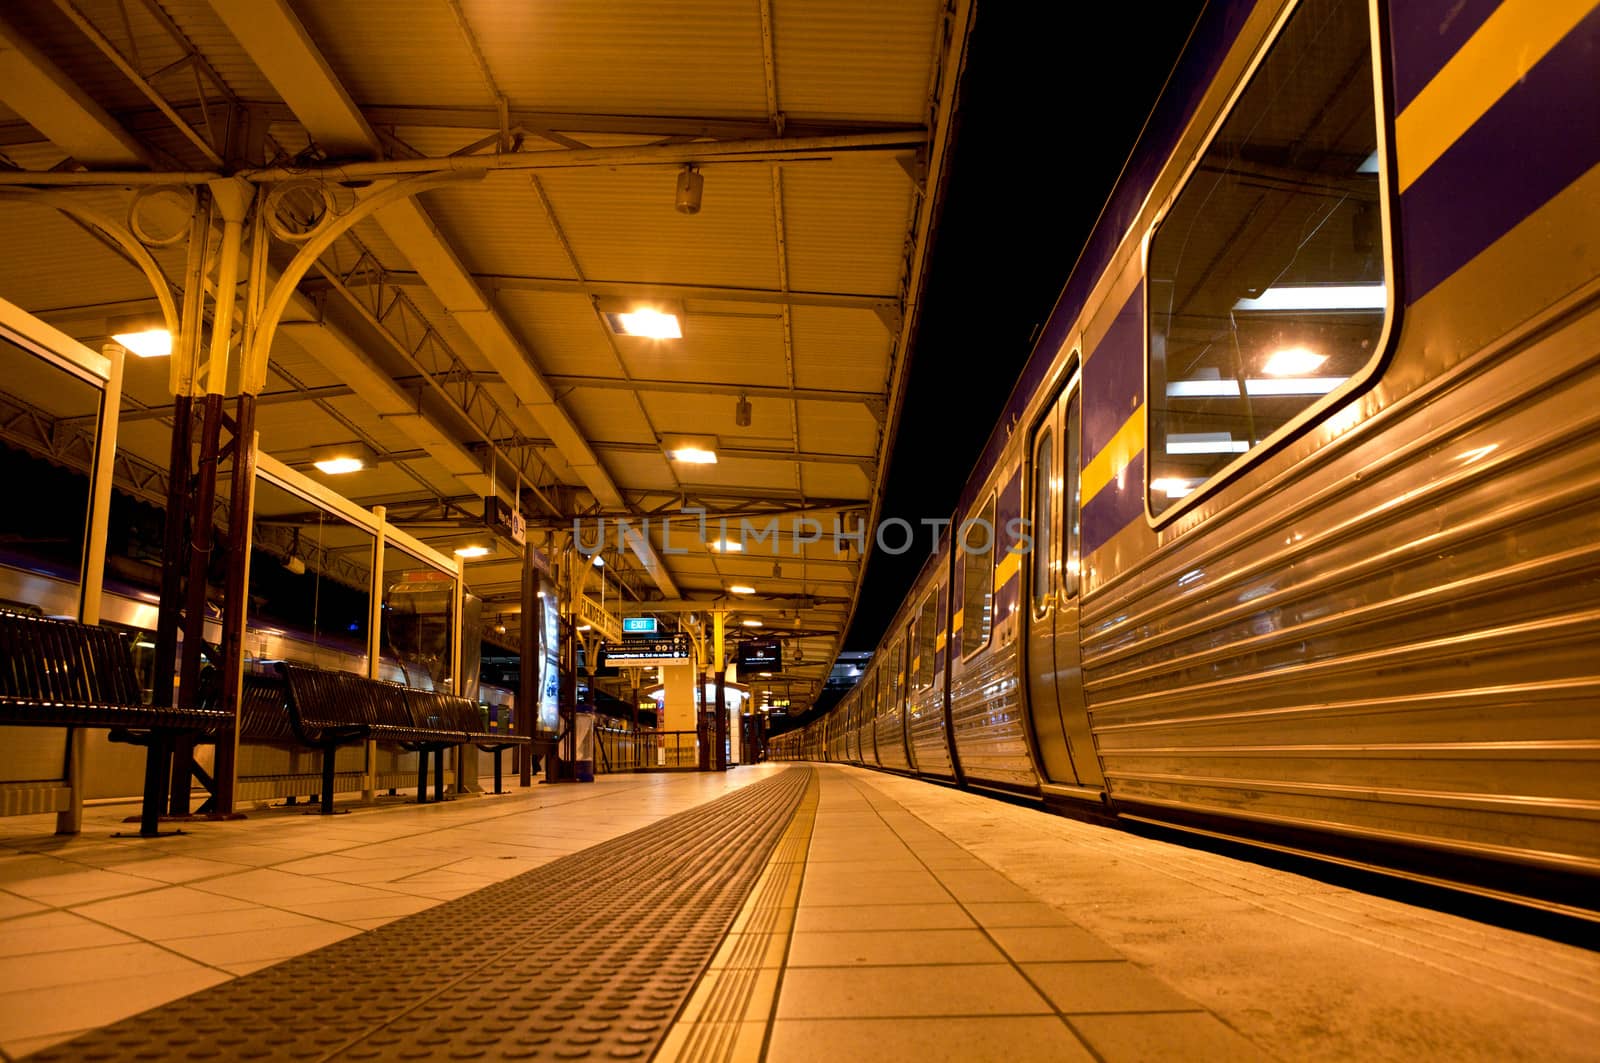 Train Stopped at Train Platform Station at night, Melbourne, Australia